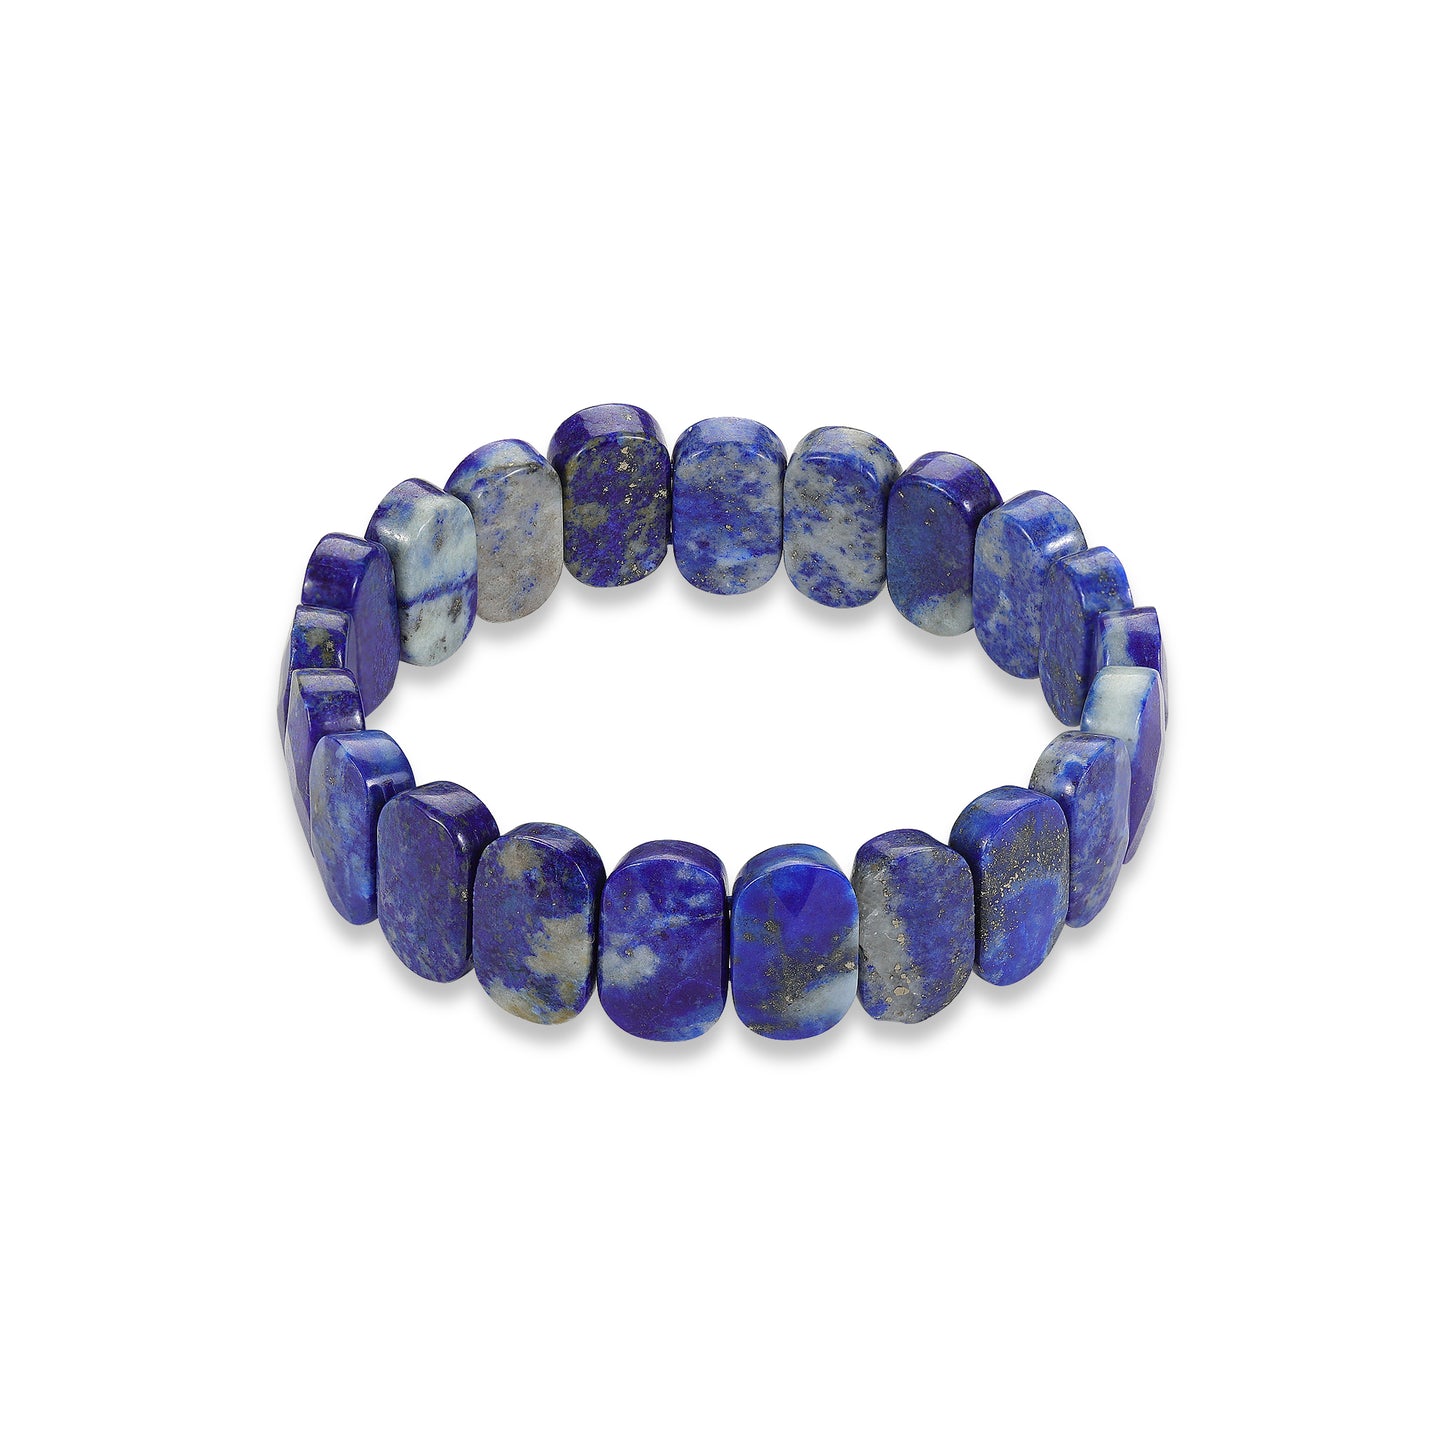 Lapis Lazuli Faceted Elastic Bracelet - Stone of Knowledge and Wisdom